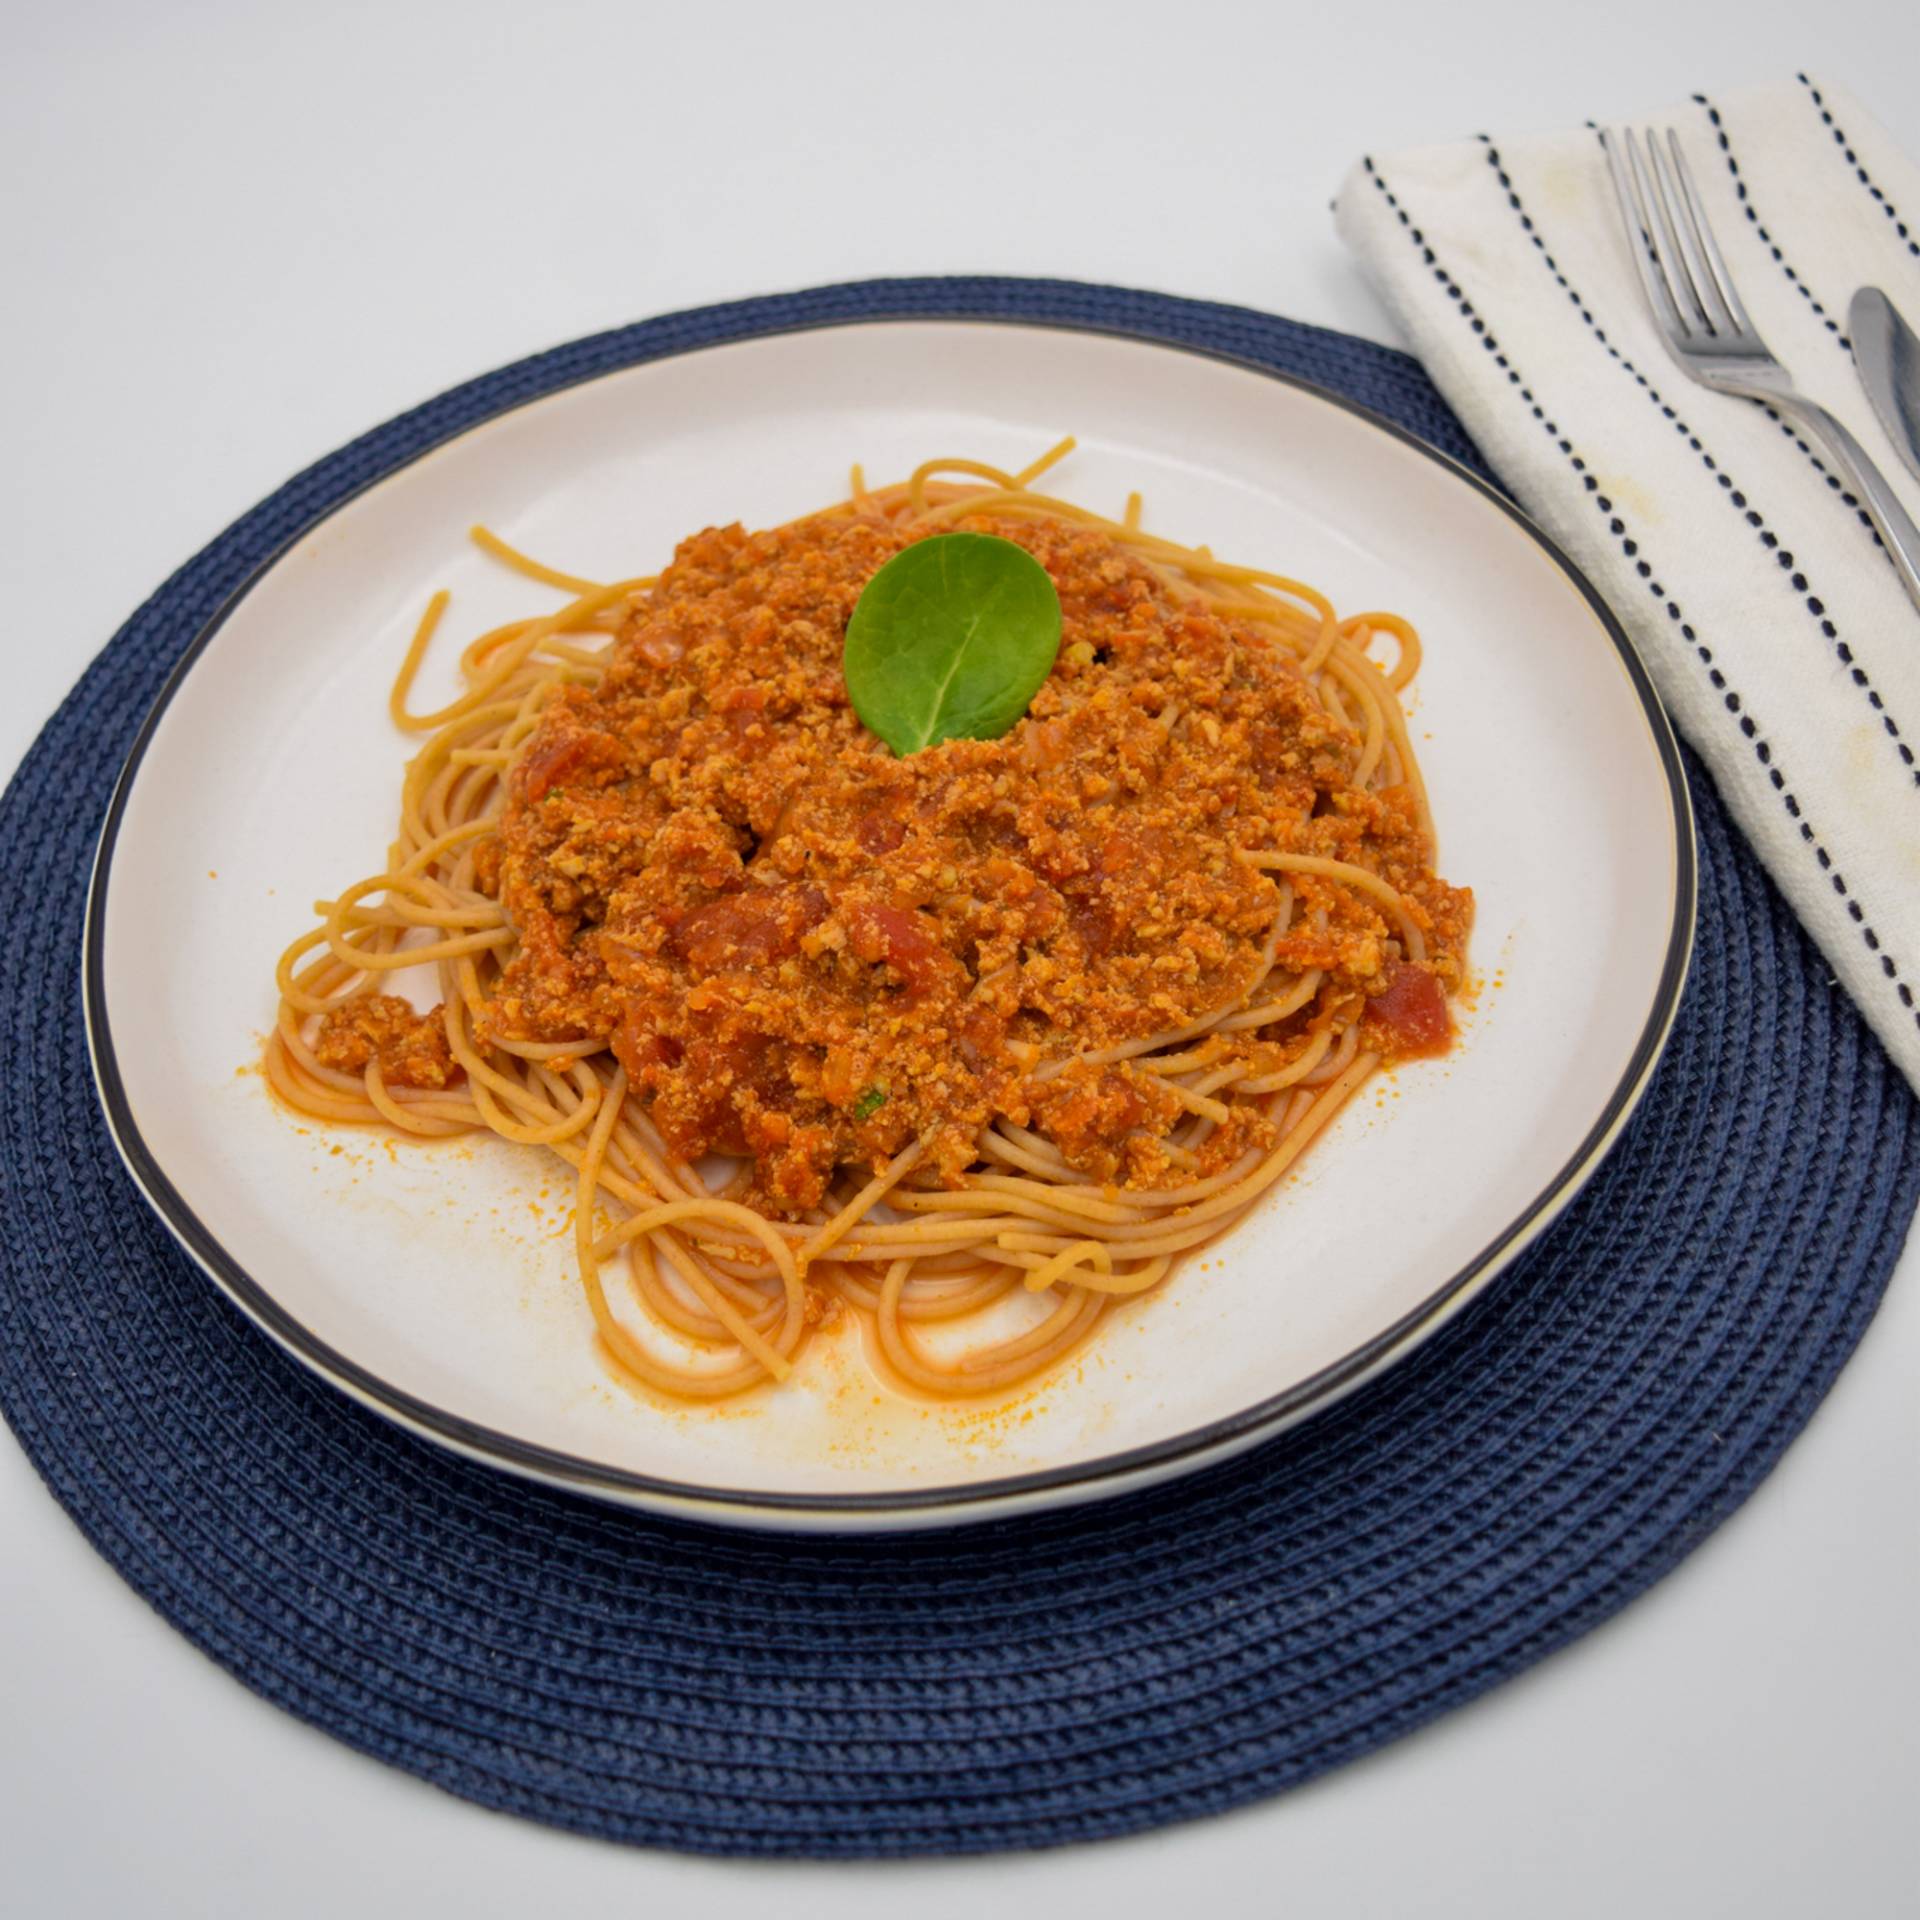 Gluten-free spaghetti with turkey bolognese